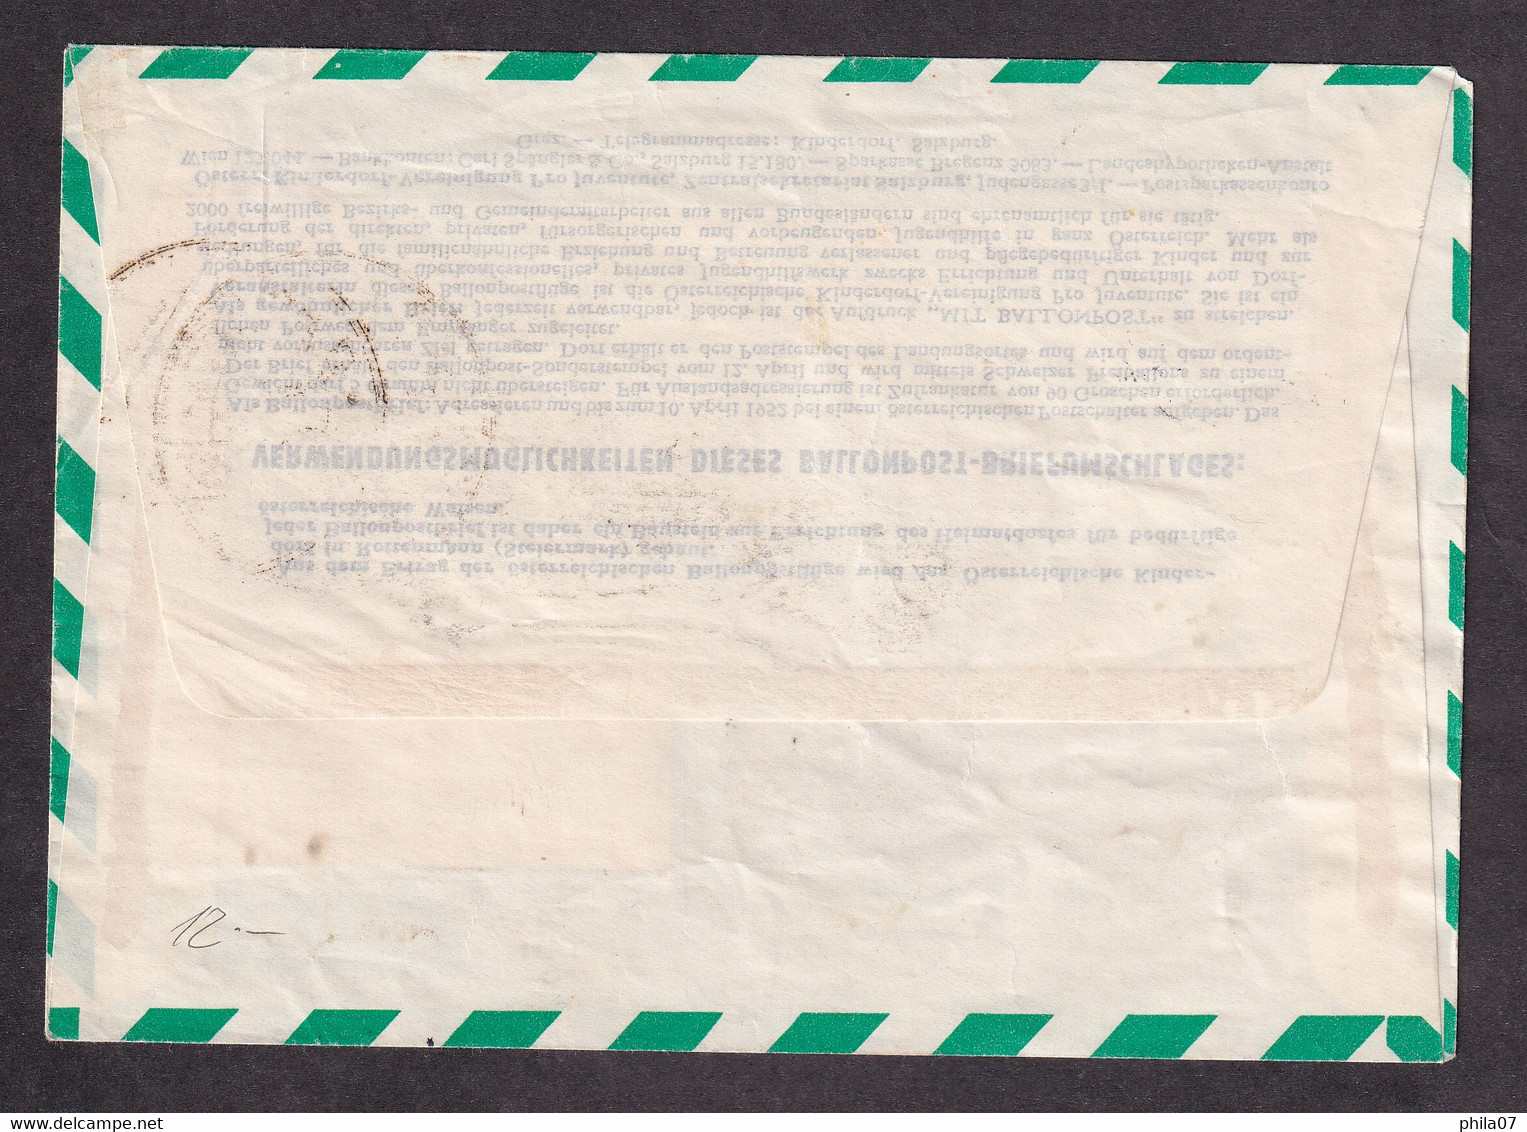 AUSTRIA - 8 Ballonpost, Envelope With Imprinted Value, Sent From Bregenza To Switzerland 12.04. 1952.  / 2 Scan - Par Ballon